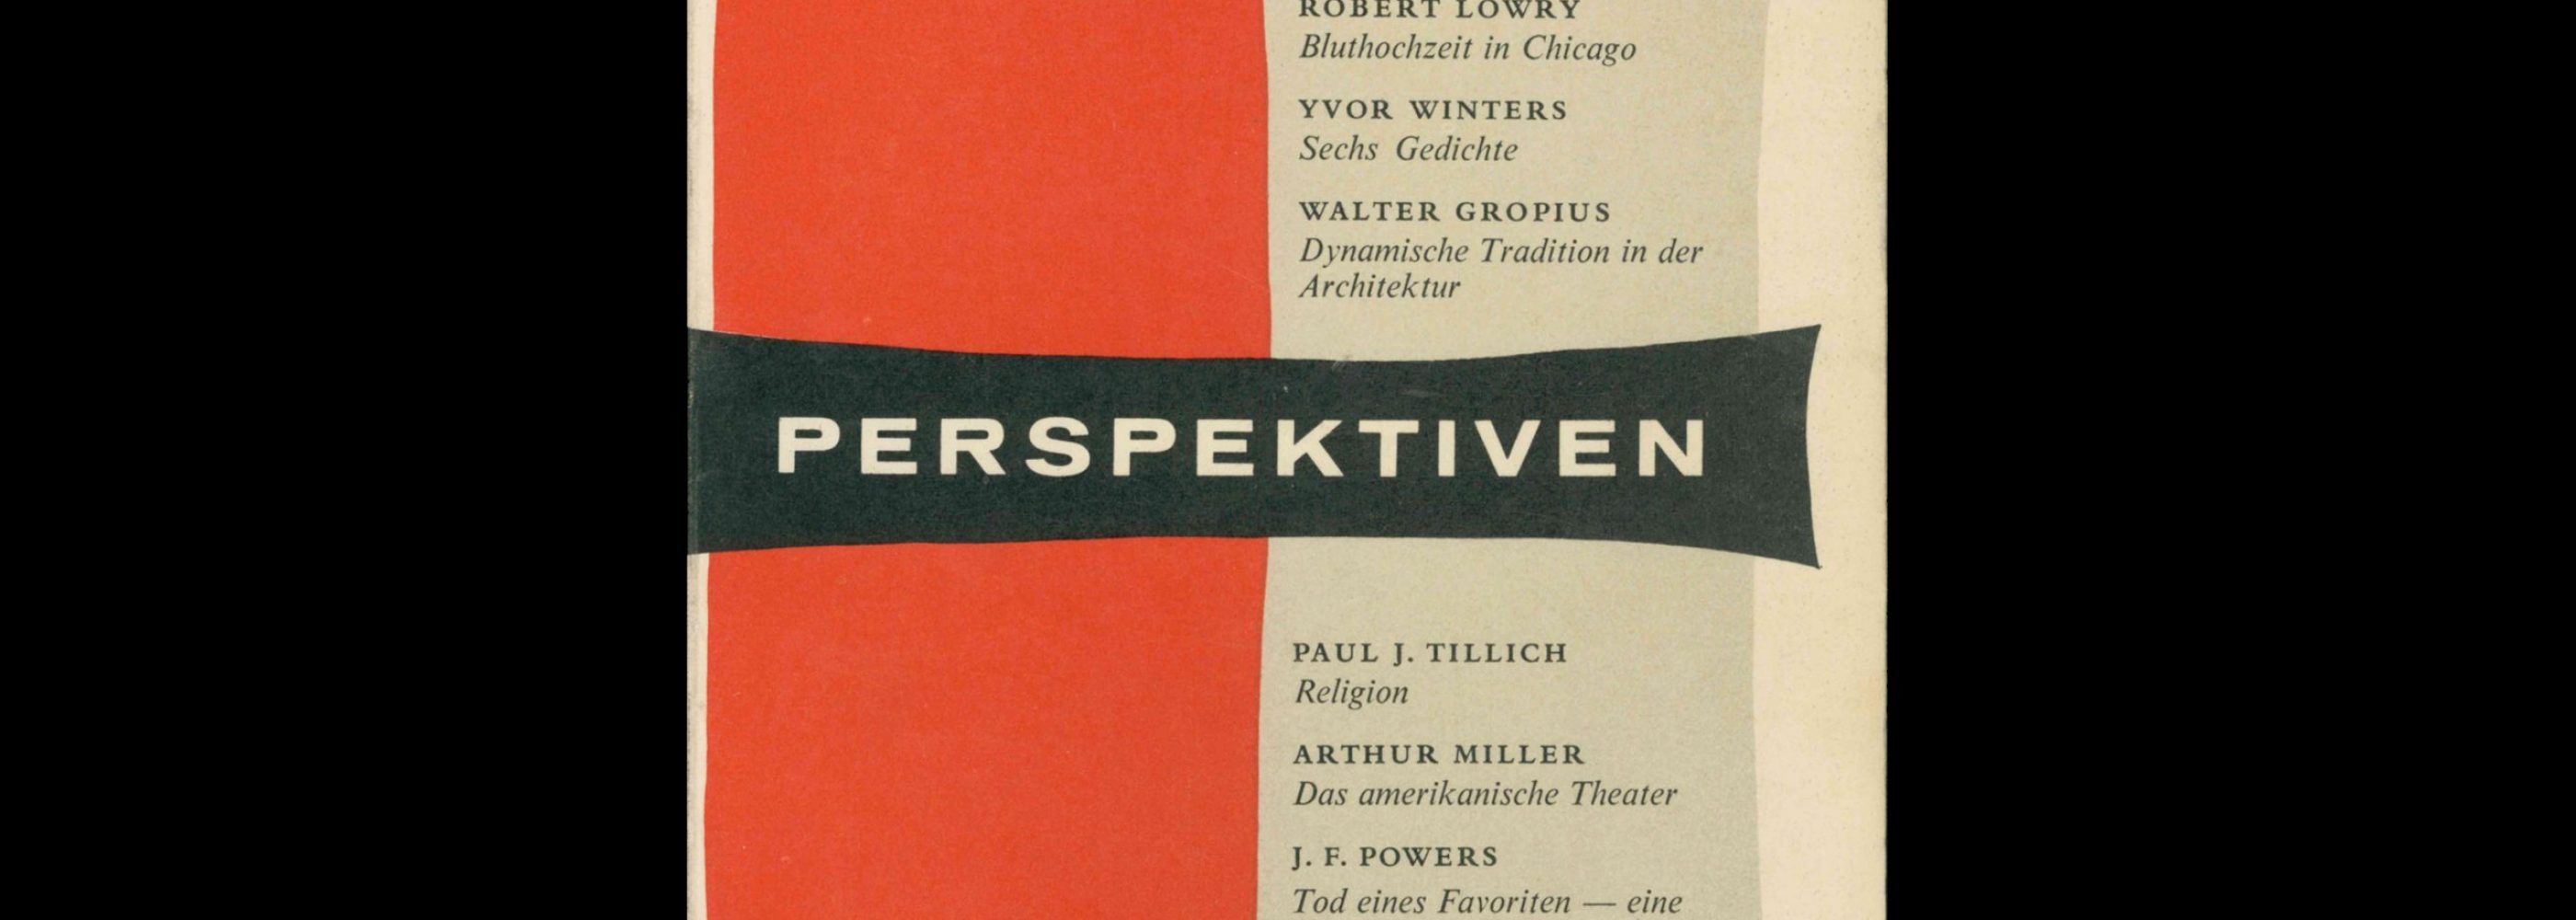 Perspektiven, Literatur, Kunst, Musik, 15, 1956. Cover design by Alvin Lustig